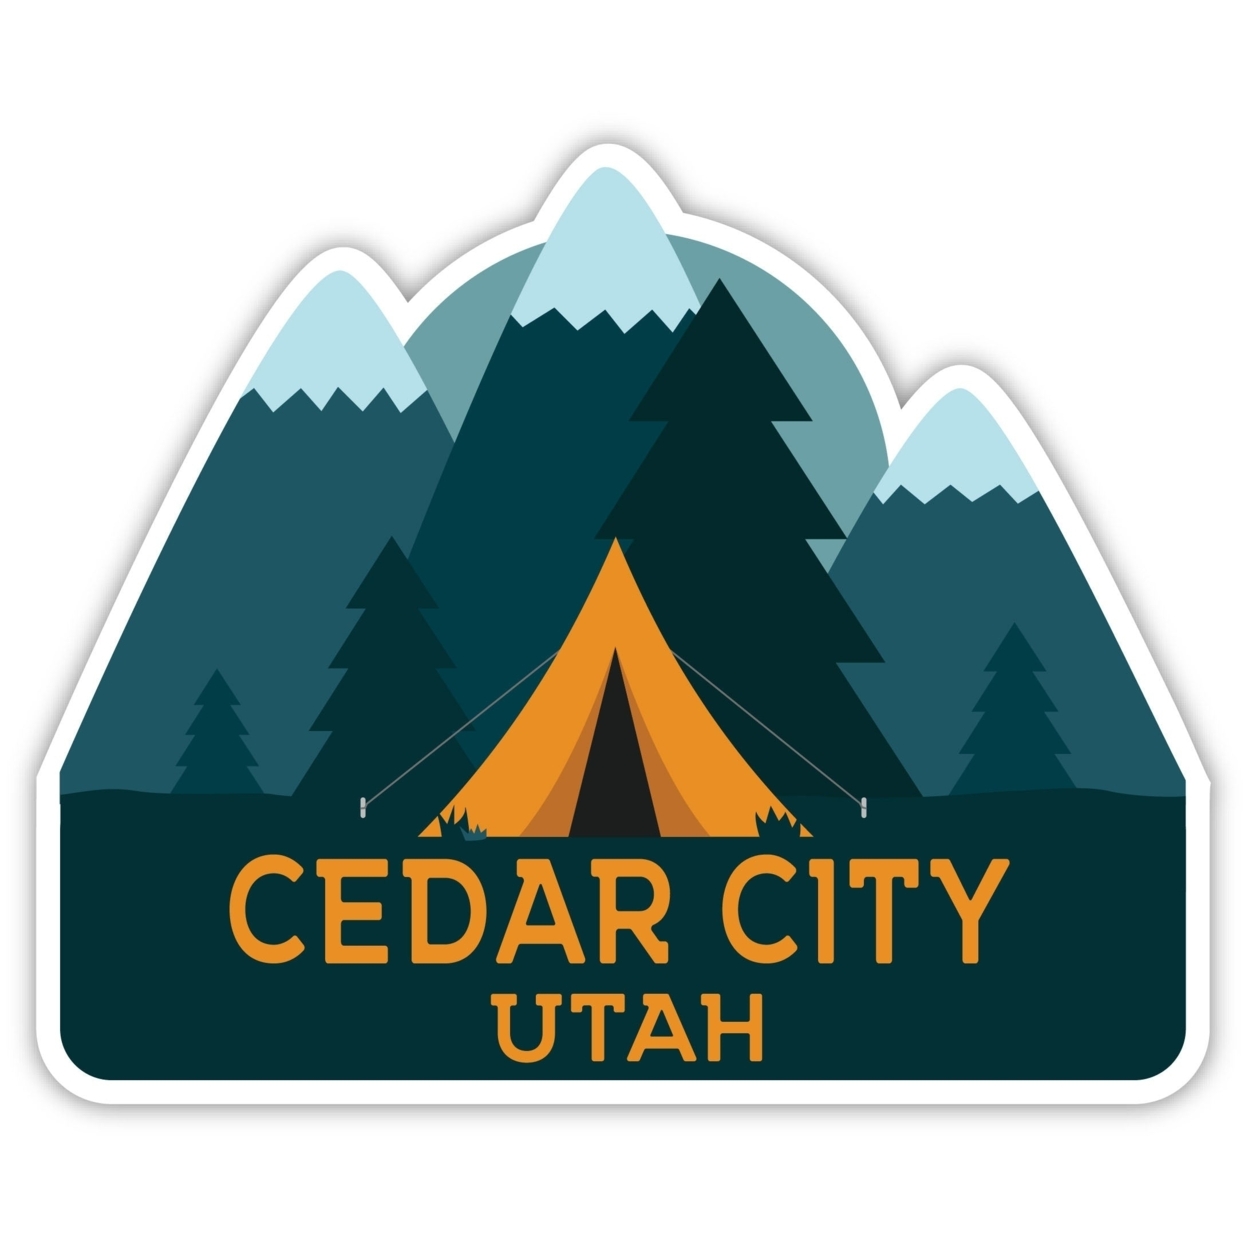 Cedar City Utah Souvenir Decorative Stickers (Choose Theme And Size) - Single Unit, 10-Inch, Camp Life